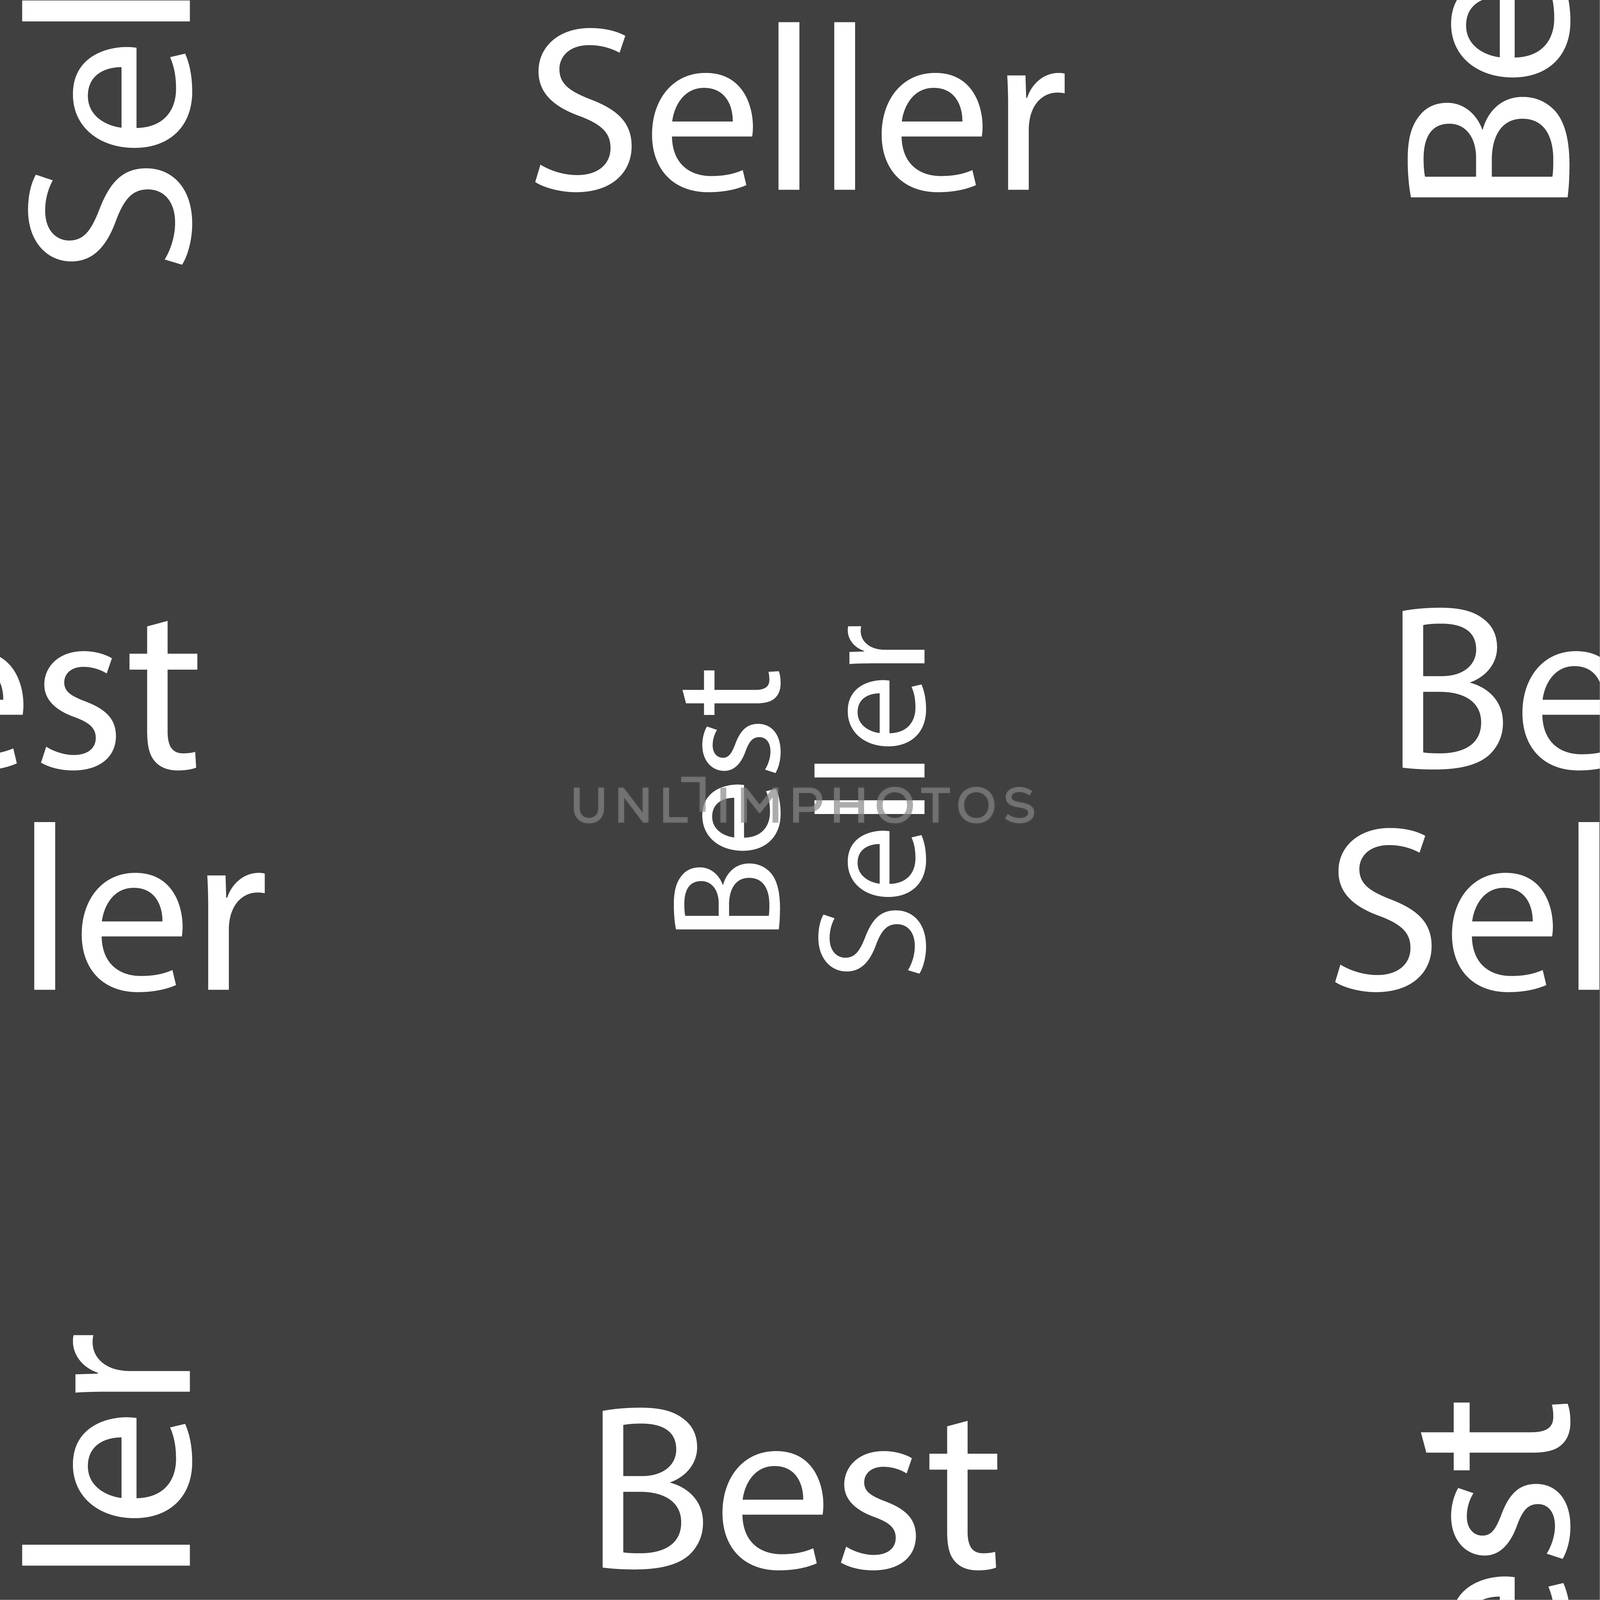 Best seller sign icon. Best seller award symbol. Seamless pattern on a gray background. illustration